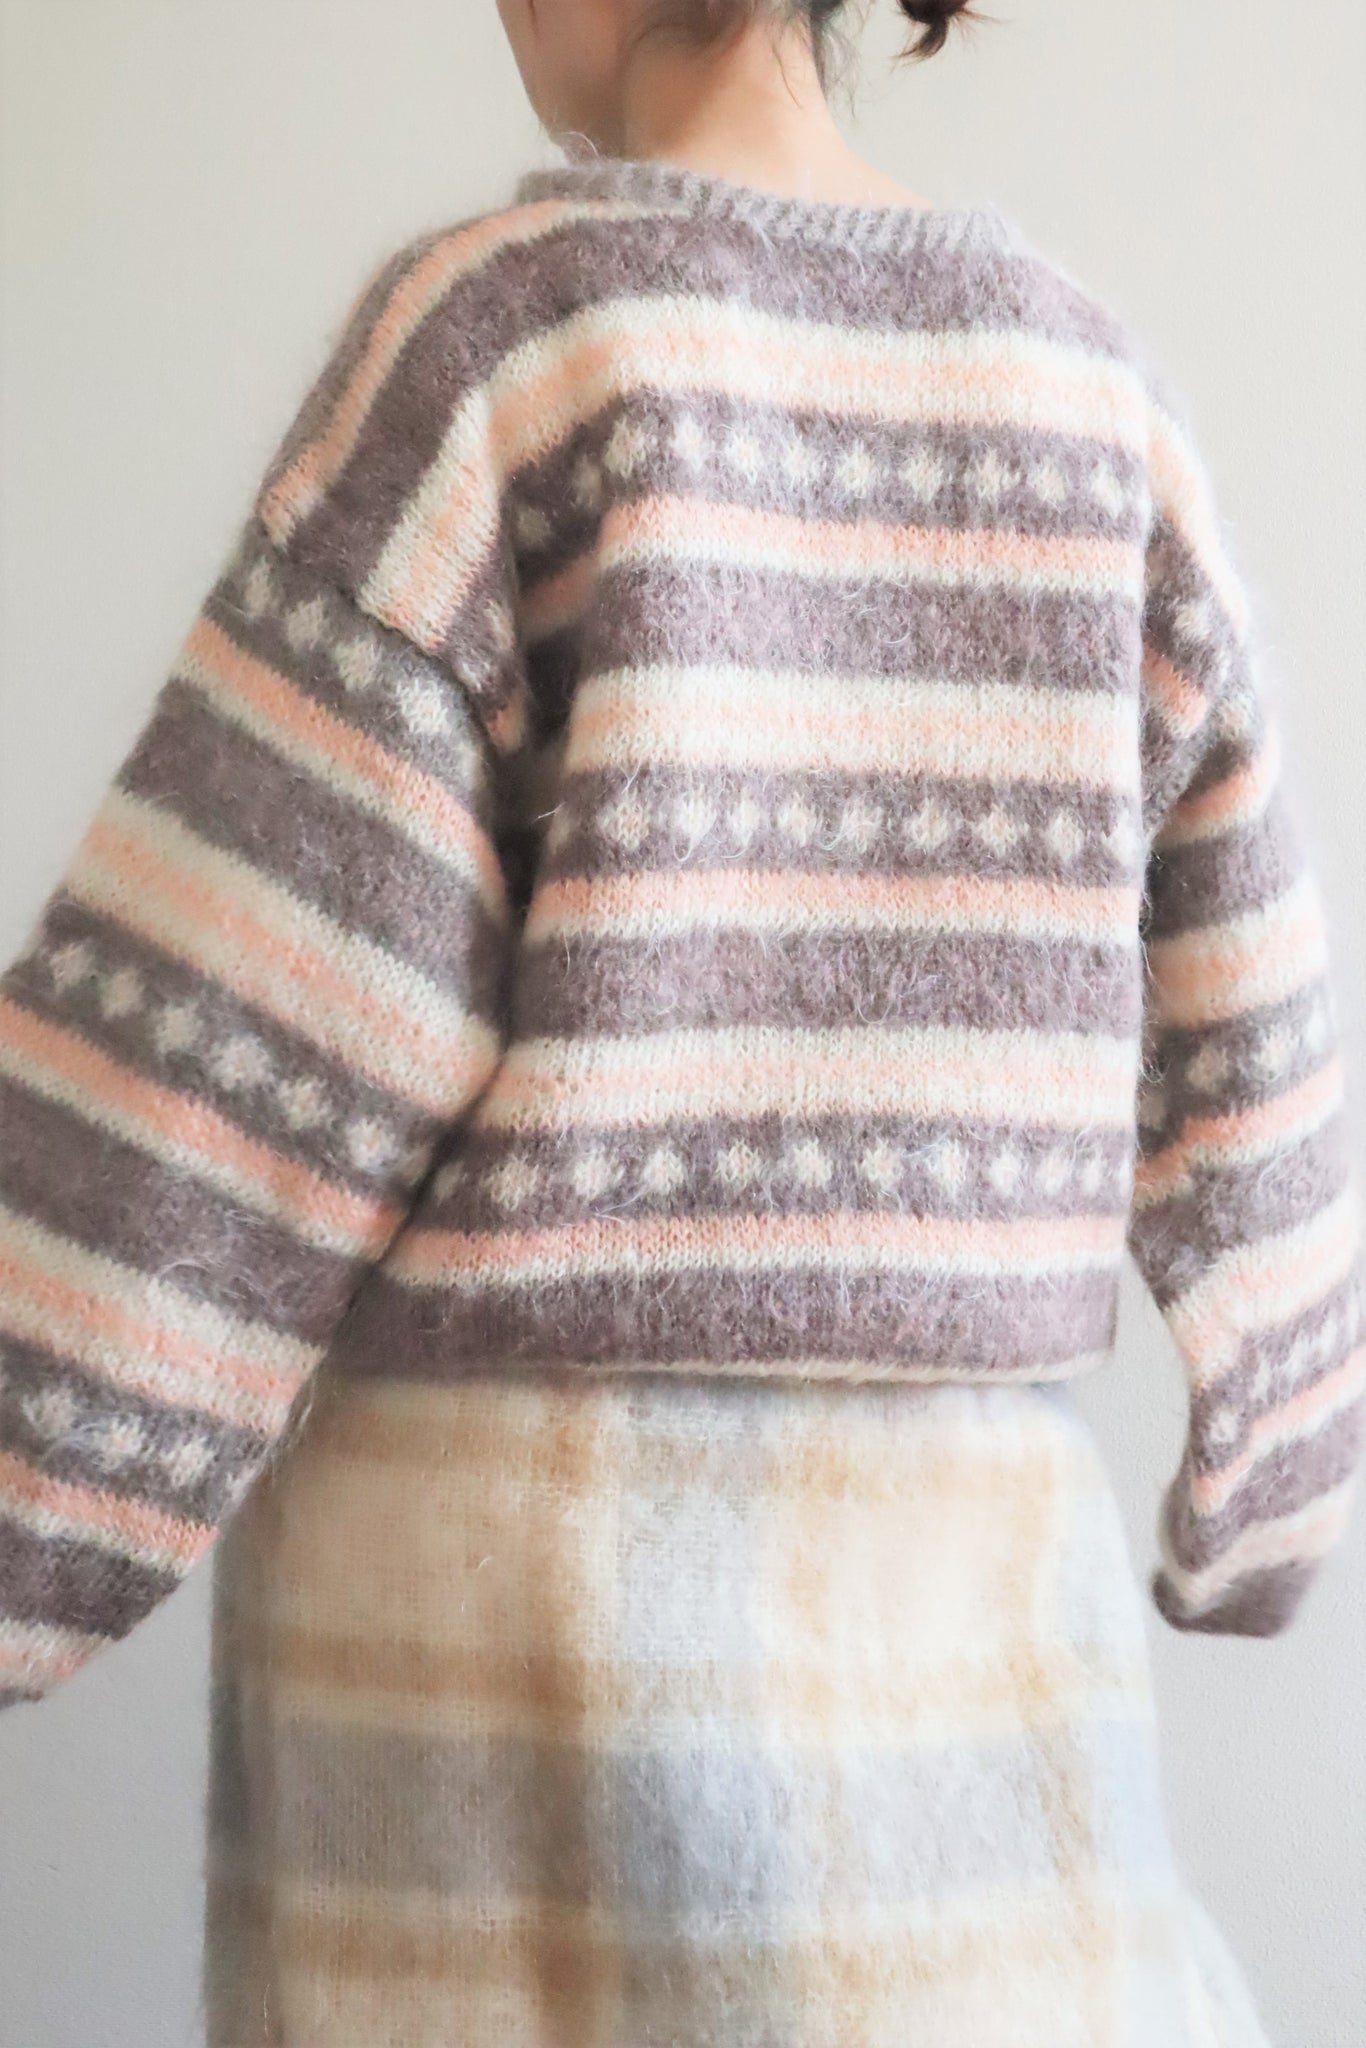 80s Pale Brown Striped Diamond Pattern Hand Knit Sweater